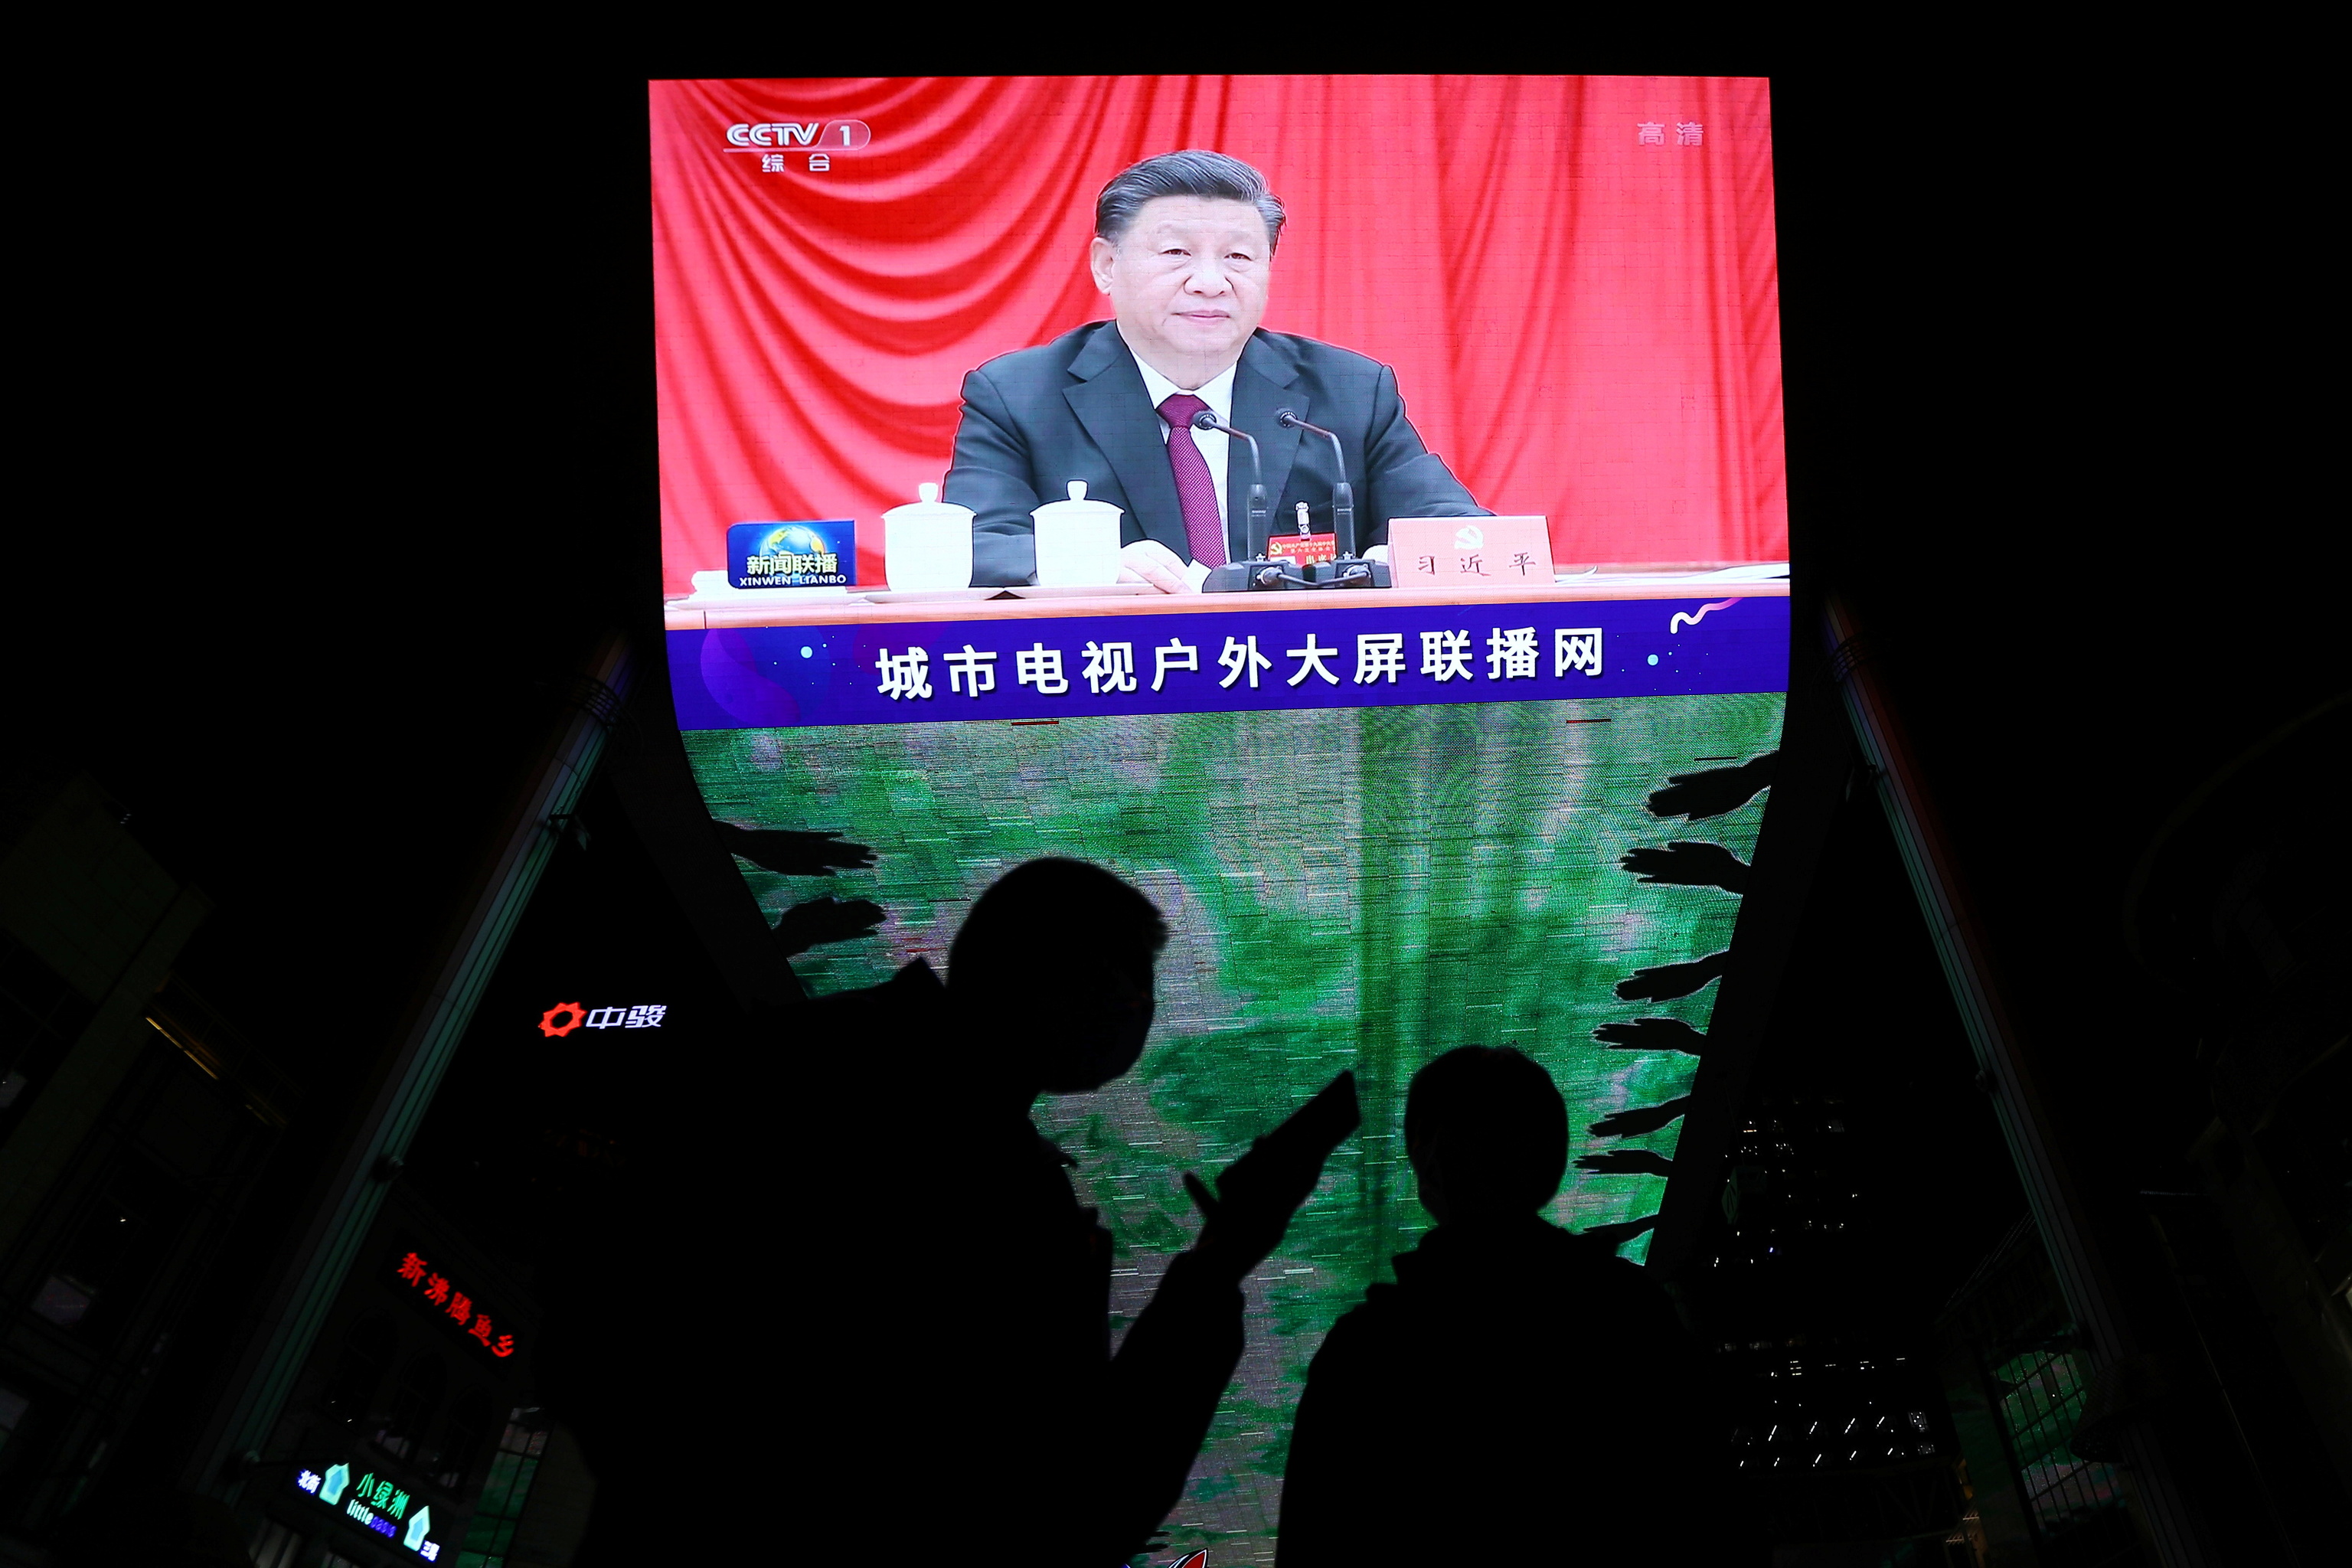 Una pantalla gigante muestra al presidente Xi Jinping.